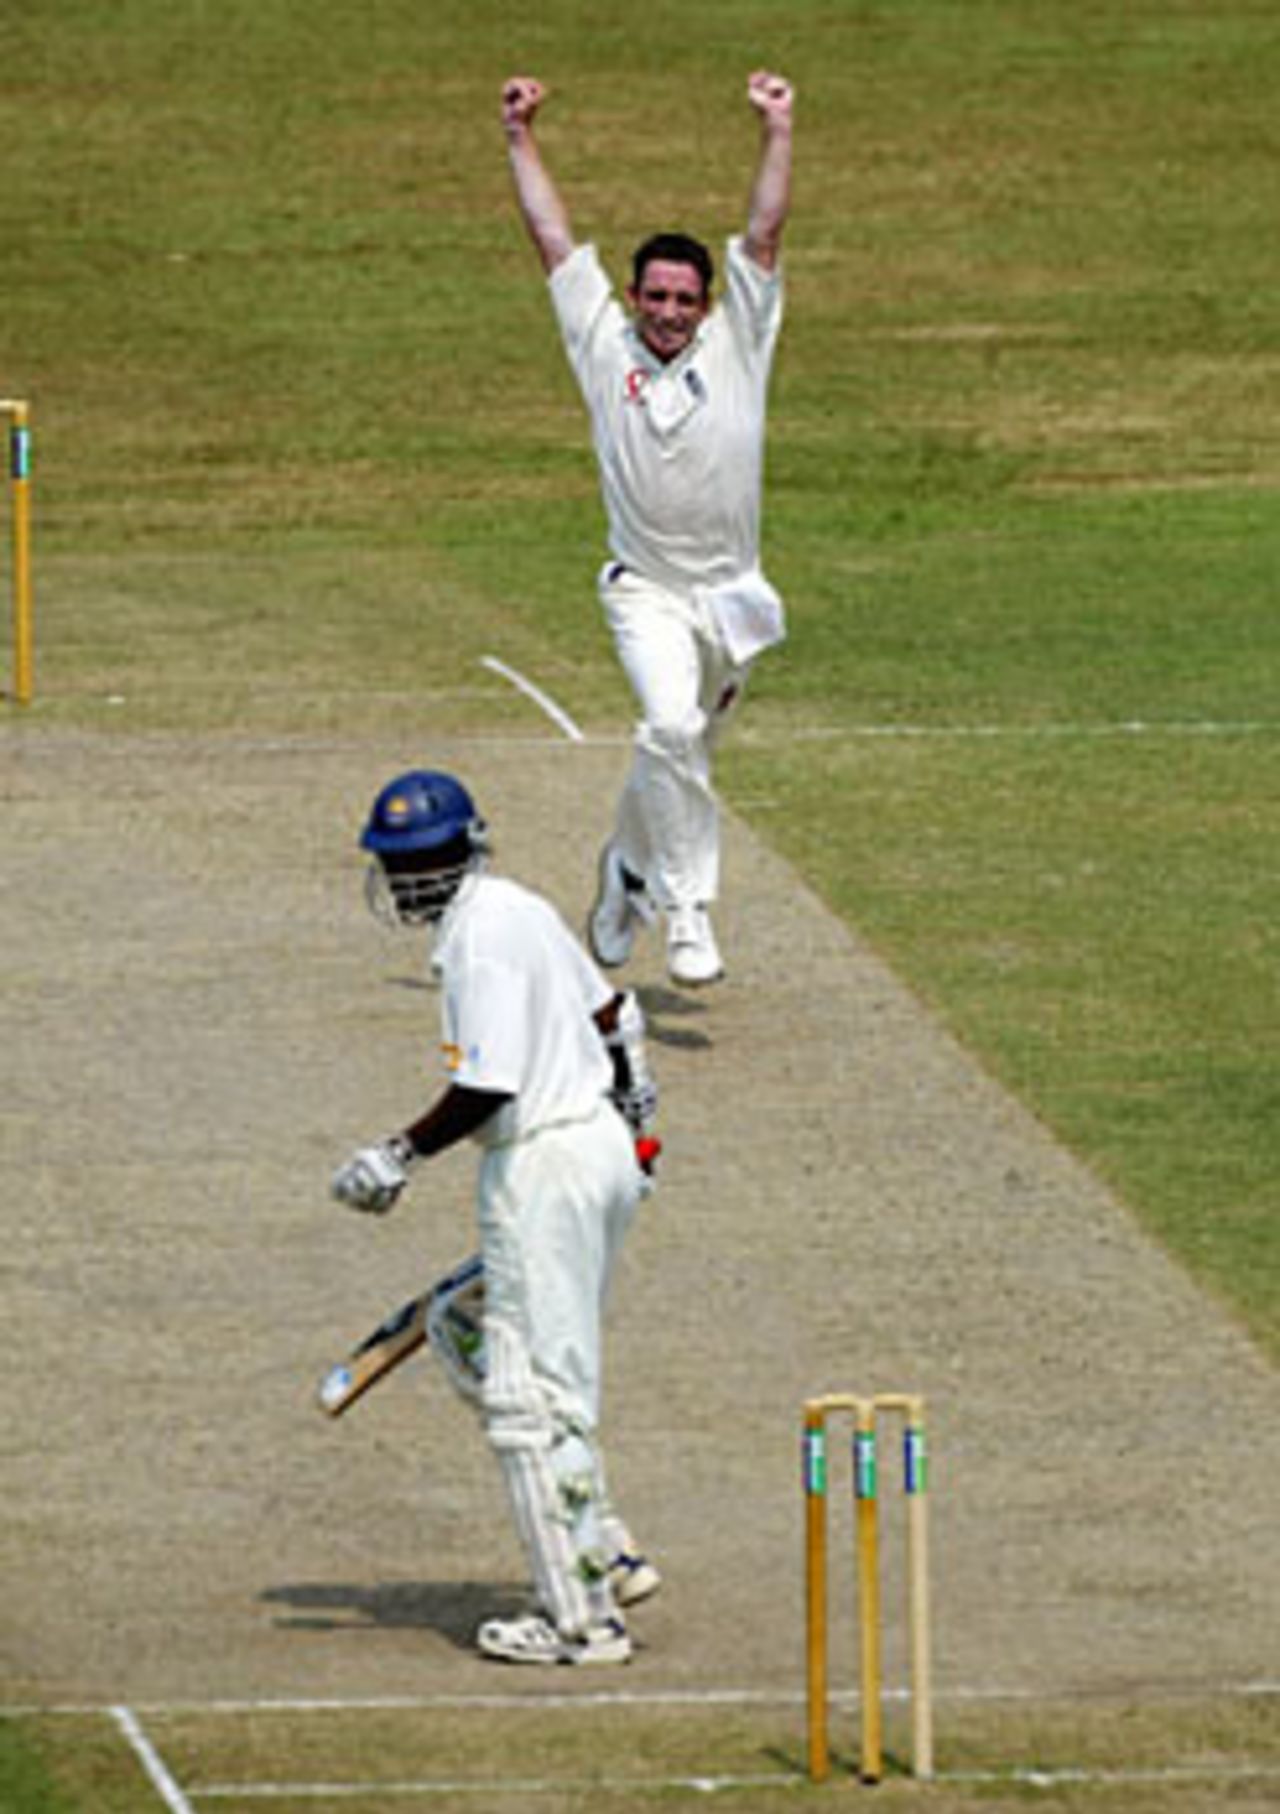 James Kirtley celebrates the wicket of Kumar Sangakkara, caught by Marcus Trescothick, Sri Lanka v England, 3rd Test, Colombo, December 19, 2003